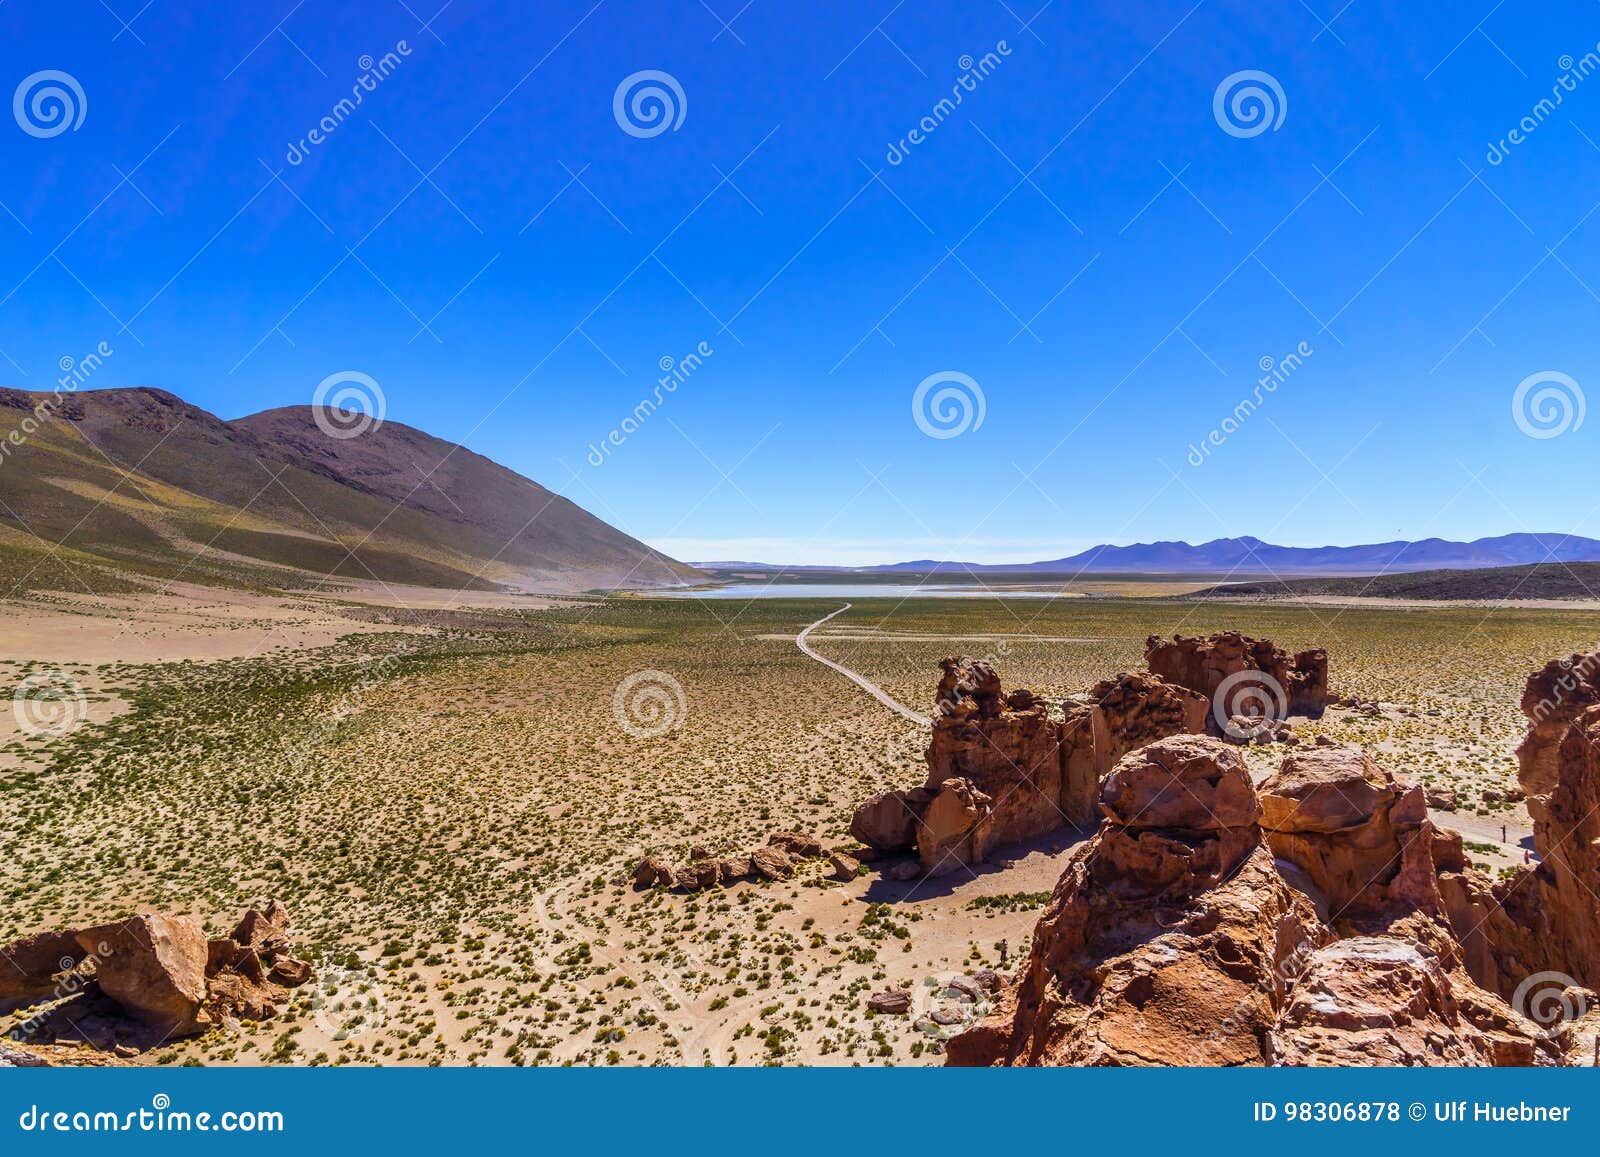 siloli desert in altiplano of bolivia by uyuni